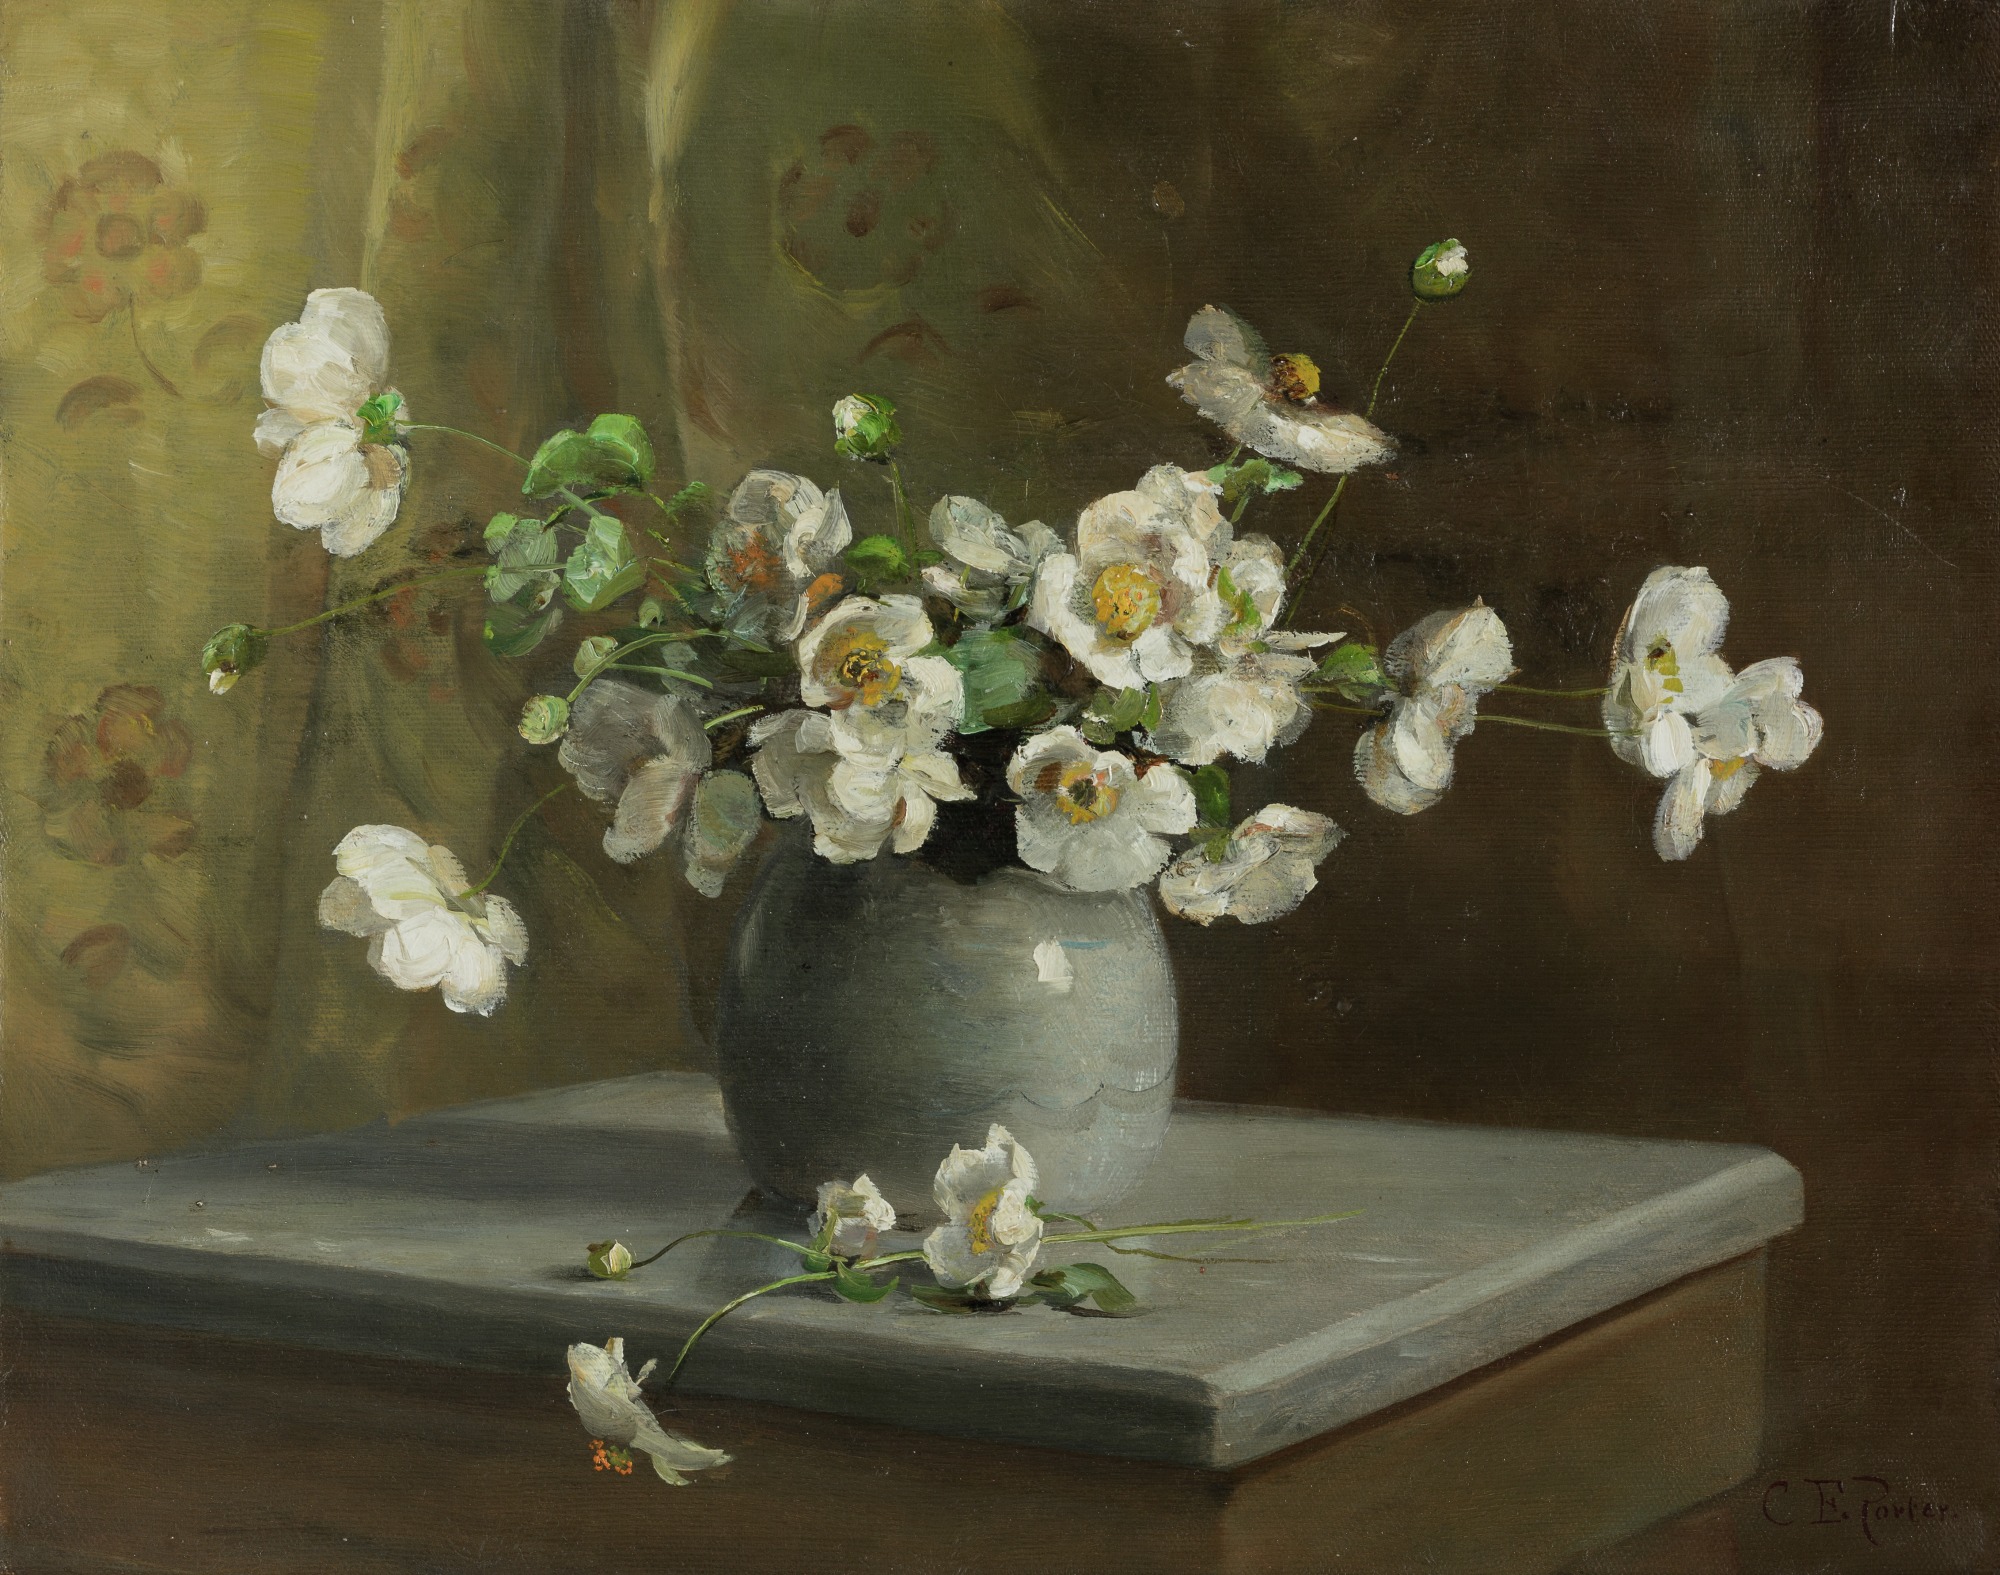 Vaso con flores by Charles Ethan Porter - Entre 1880 y 1890 - 41 x 51,8 cm Detroit Institute of Arts